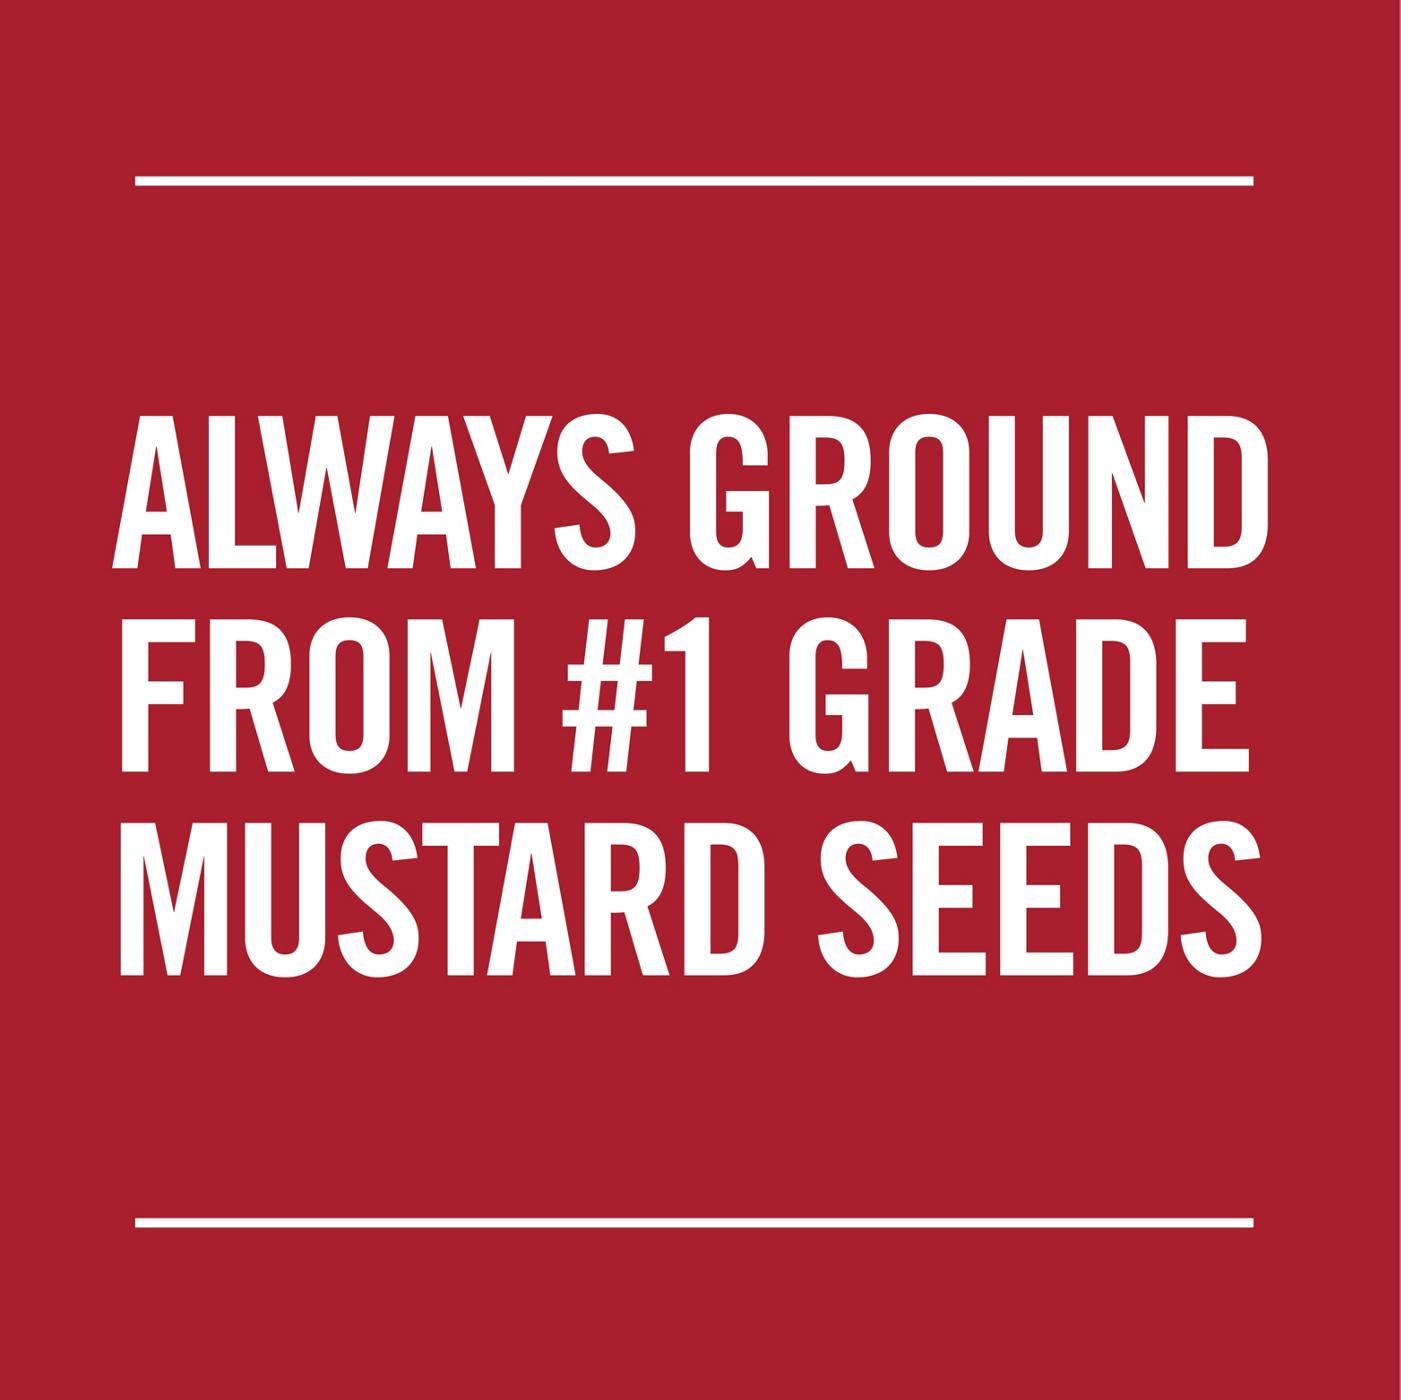 McCormick Ground Mustard; image 2 of 2